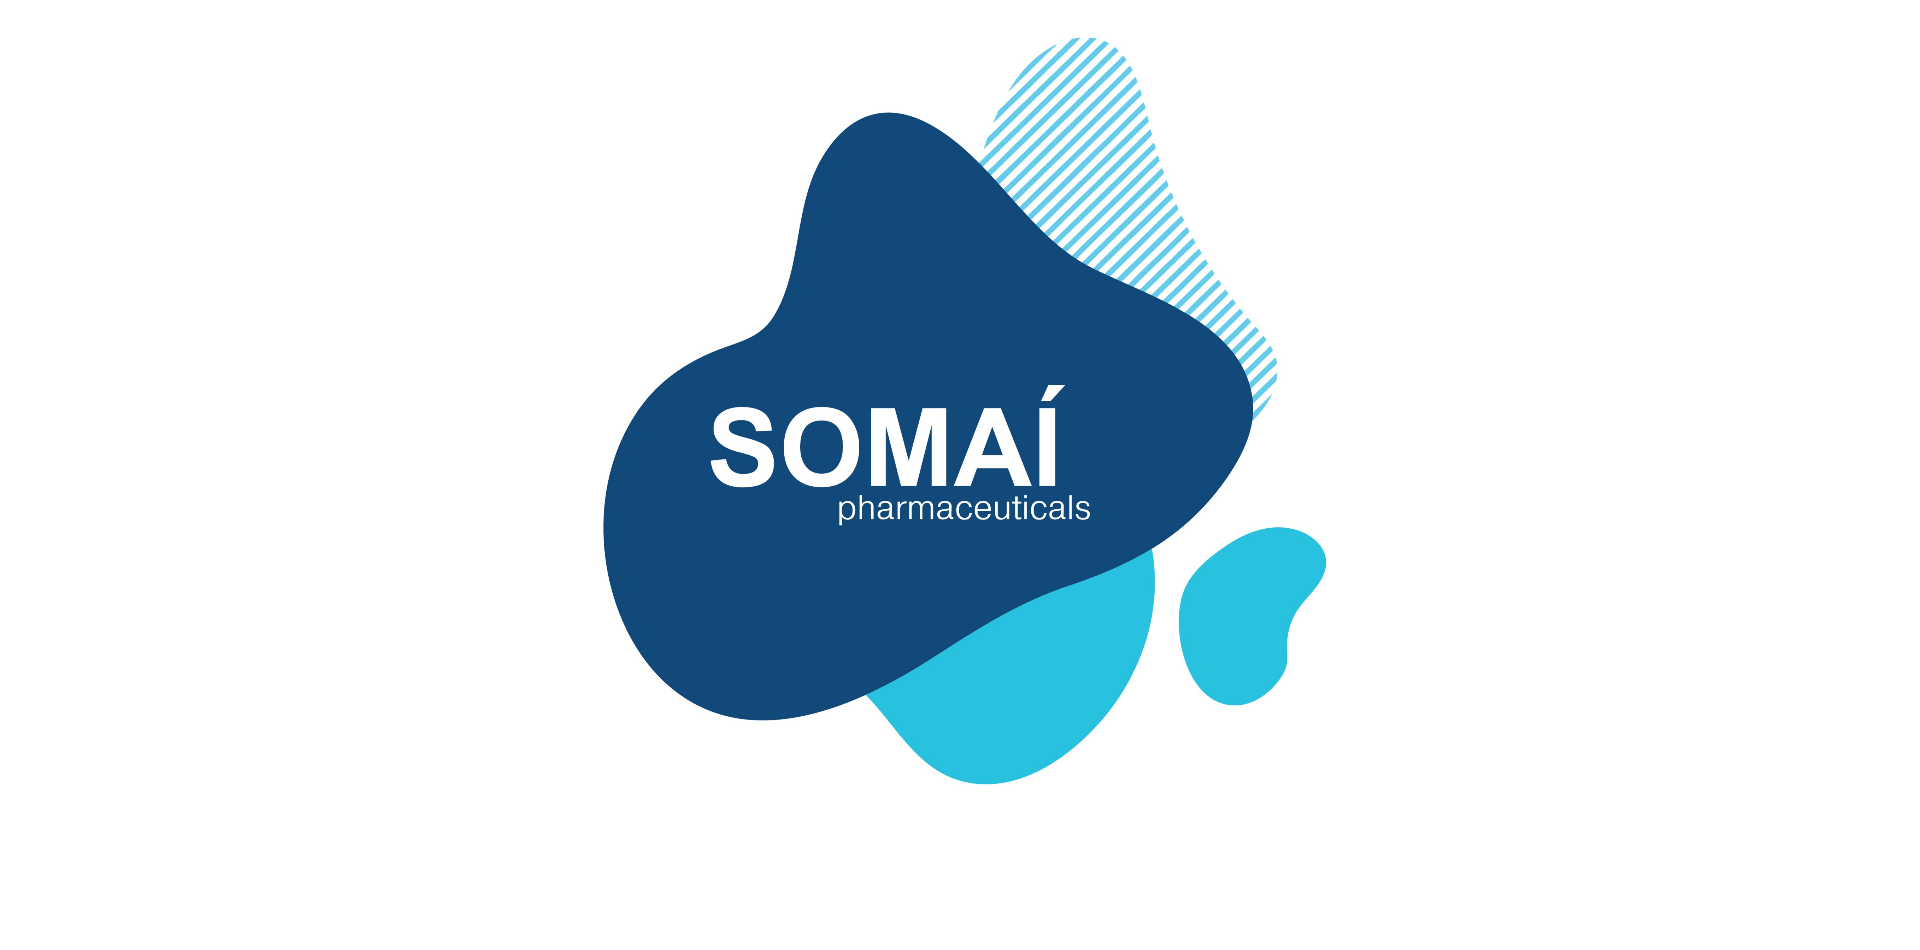 SOMAÍ Pharmaceuticals erhält 2,7 Millionen Euro aus dem Portugal 2020 Grant